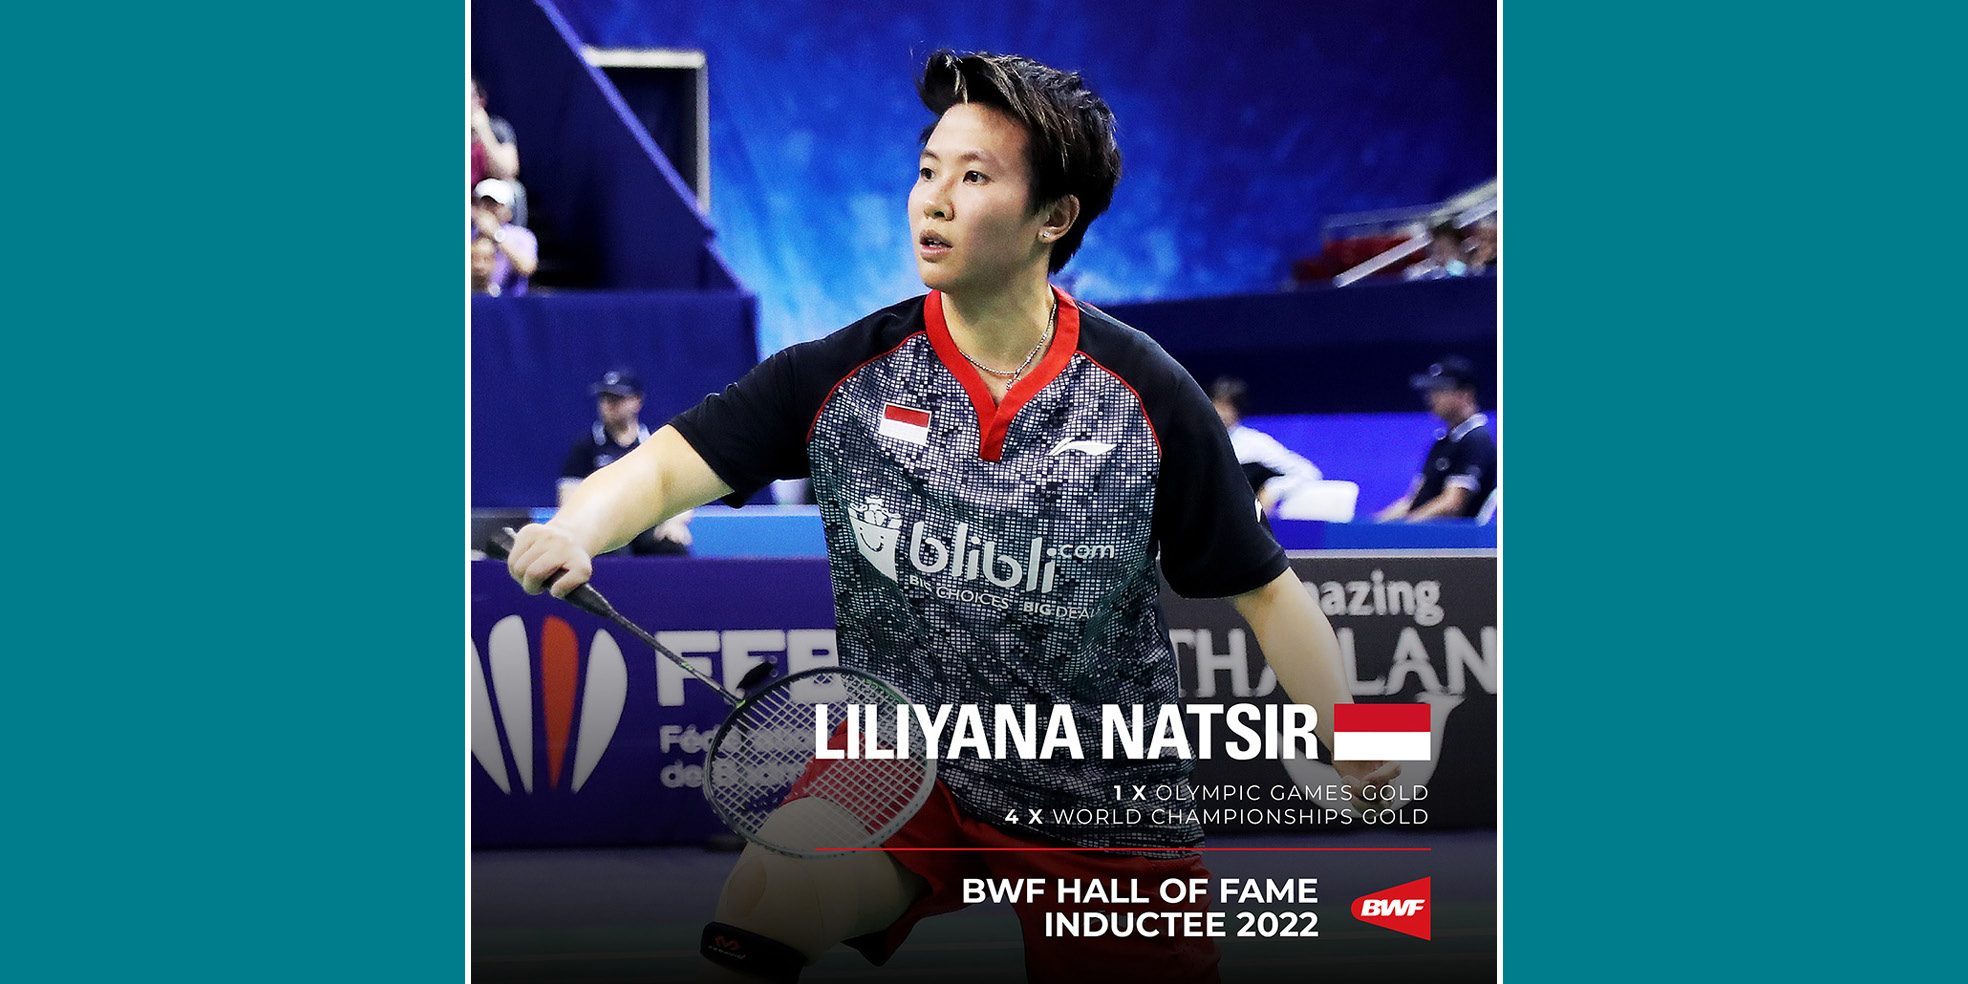 Liliyana Natsir Announced as BWF Hall of Fame Inductee 2022